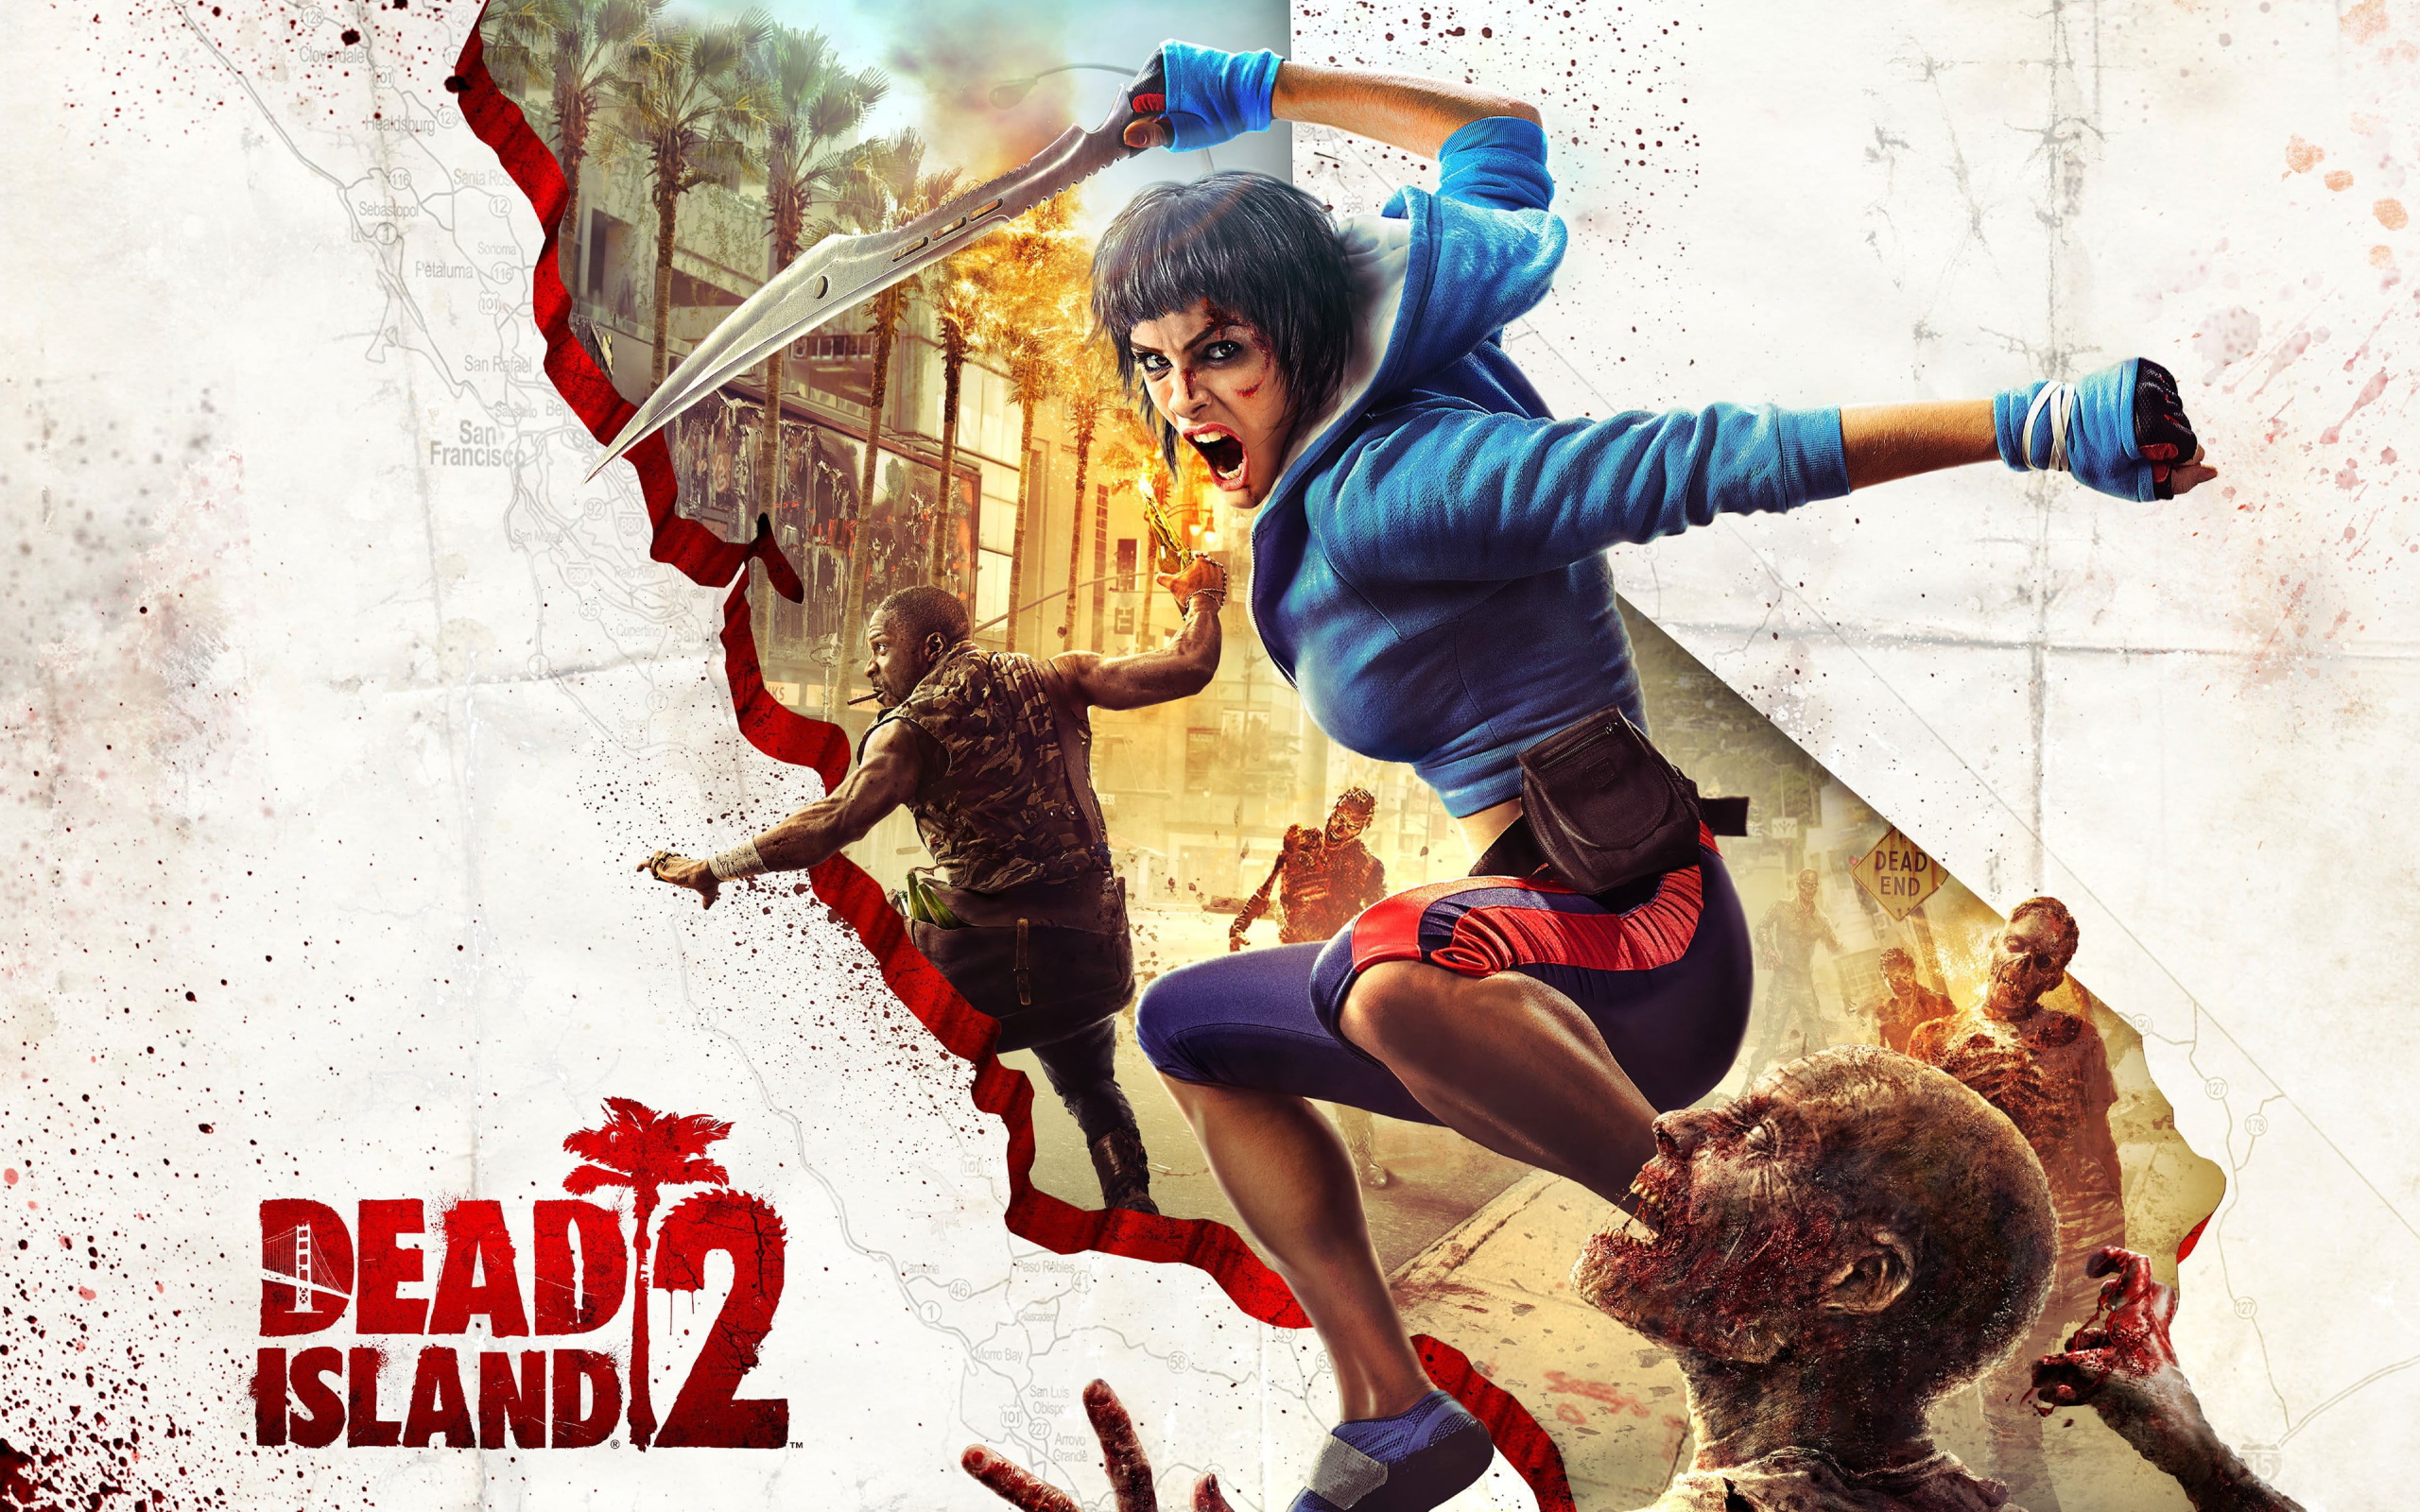 Dead Island 2 RPG poster